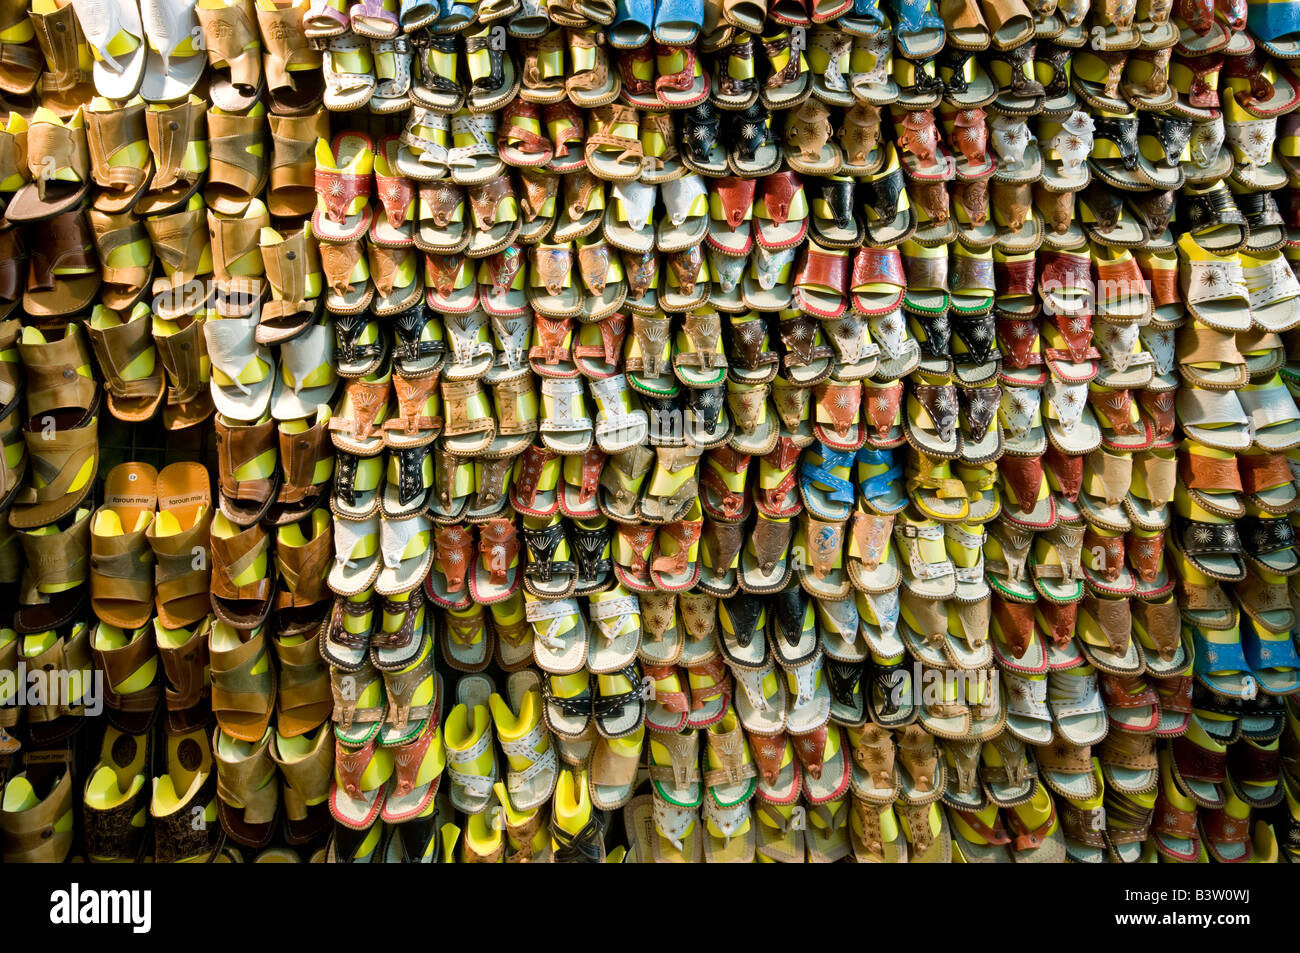 Schuh-Stall in Hurghada Ägypten Stockfotografie - Alamy